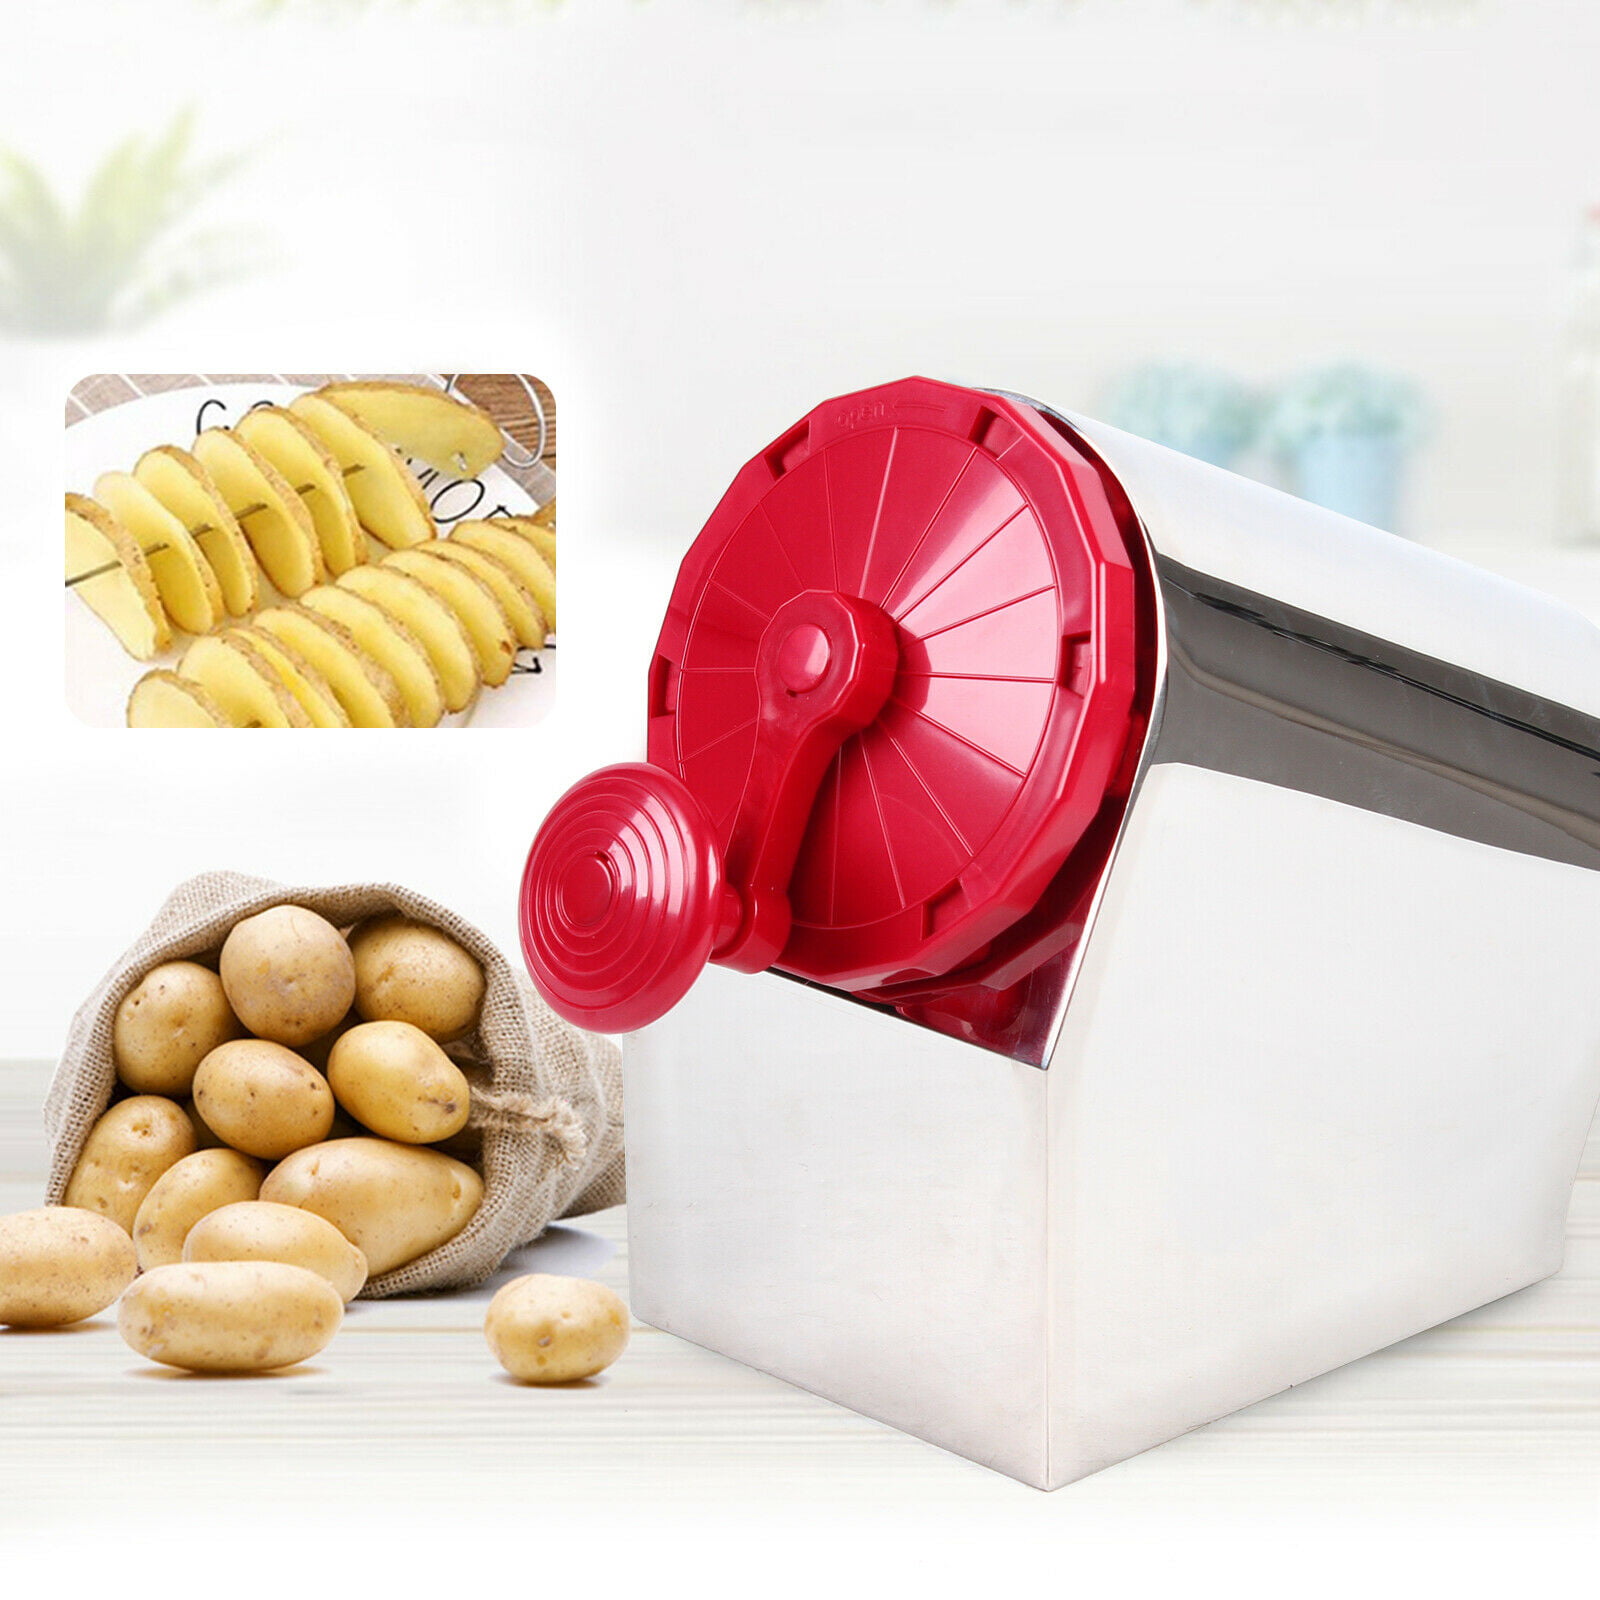 Uten Potato Twister Spiral Potato cutter Stainless Steel Slicer Machine For  Fruit, Potatoes, Tornado Chips, Cucumber or Carrots